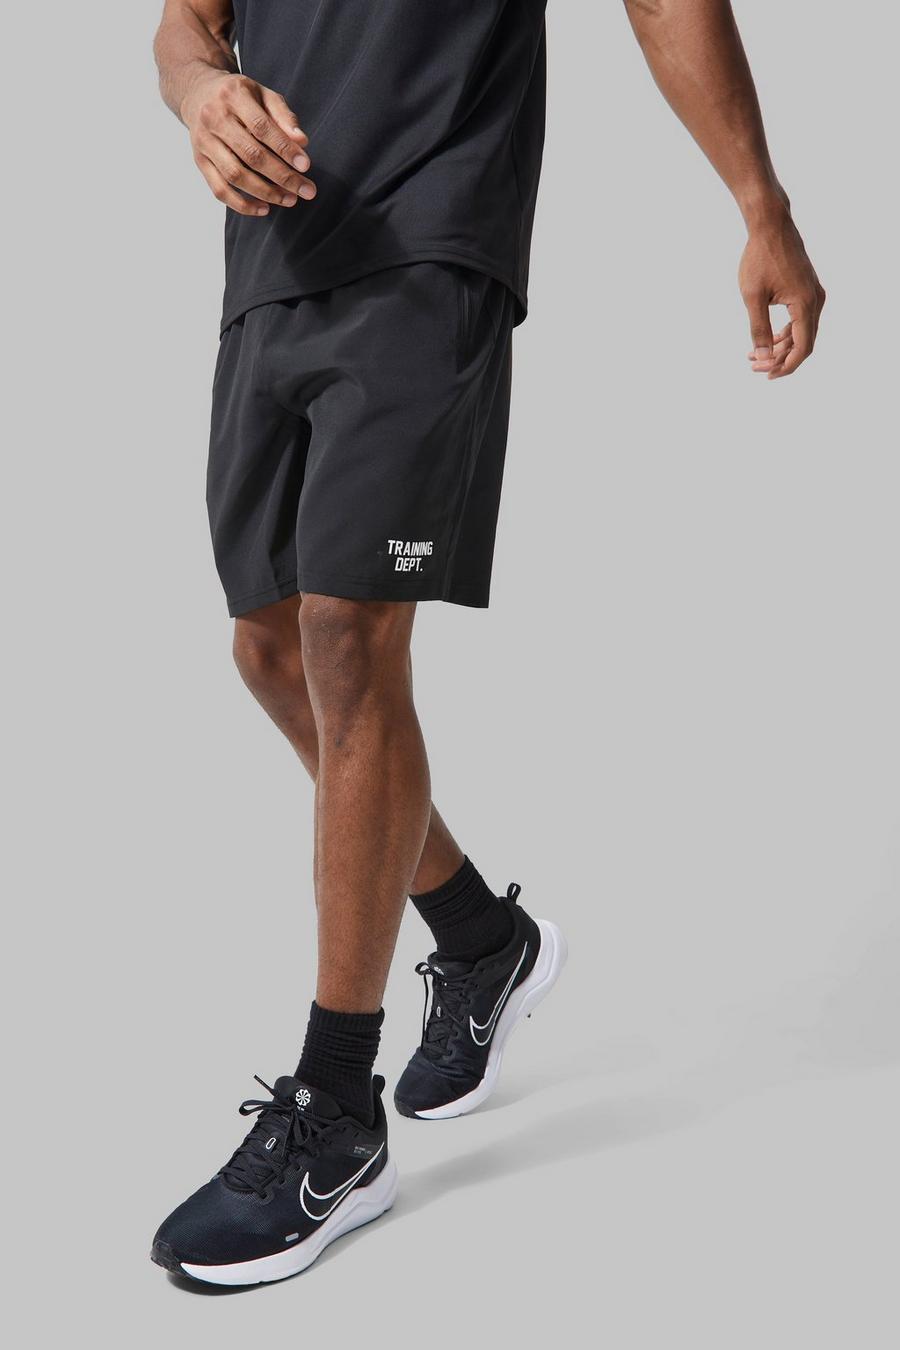 Tall Man Active Performance Trainings Dept Shorts, Black schwarz